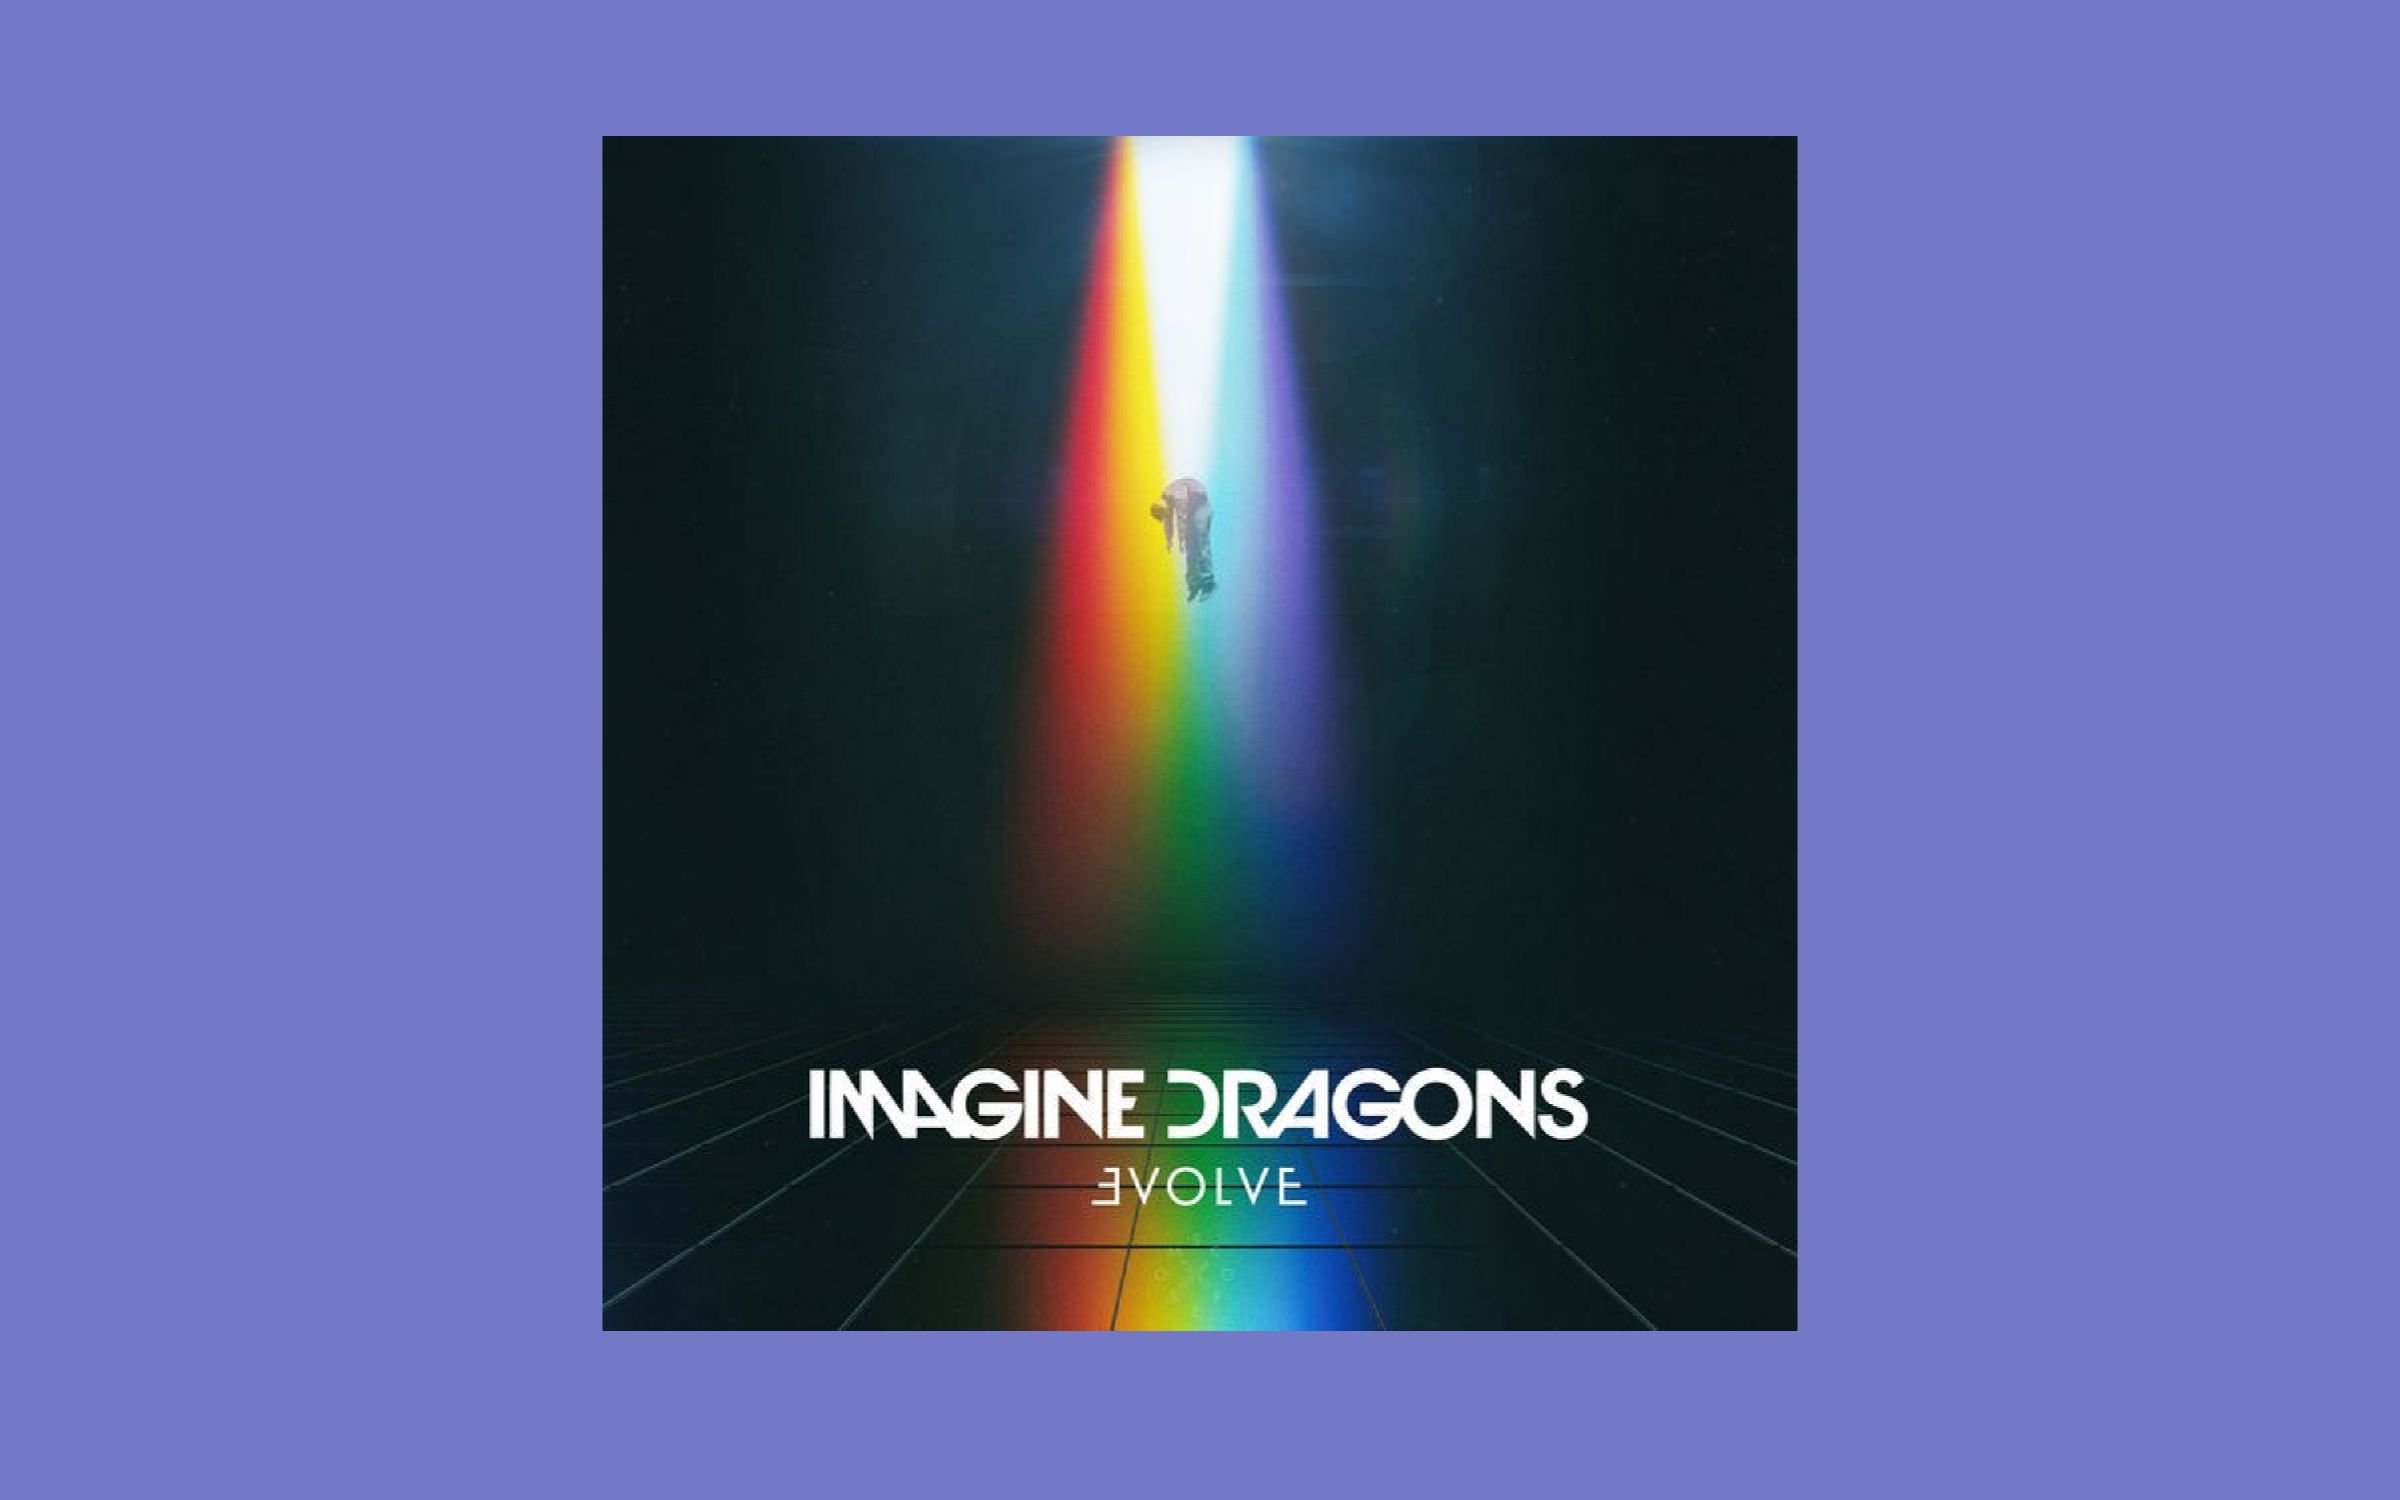 【专辑】【伴奏版】Imagine Dragons - Evolve [Deluxe] (Instrumental) 梦龙第三张录音室专辑豪华版伴奏